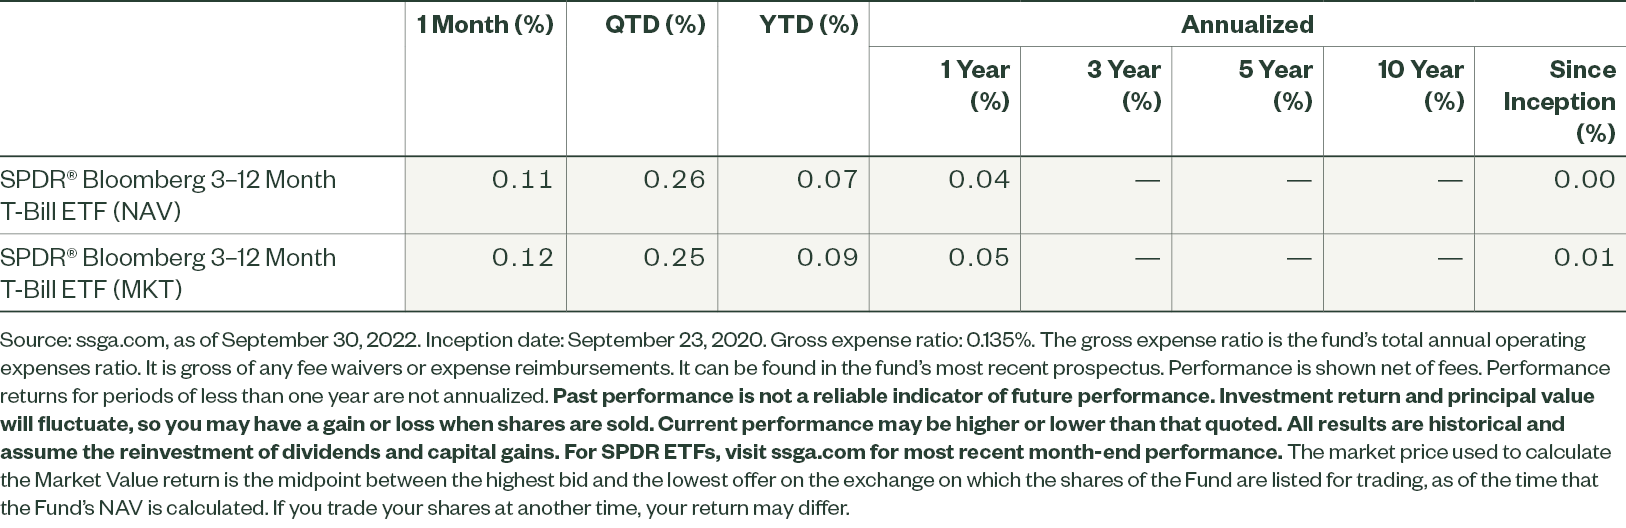 BILS Standard Performance as of September 30, 2022